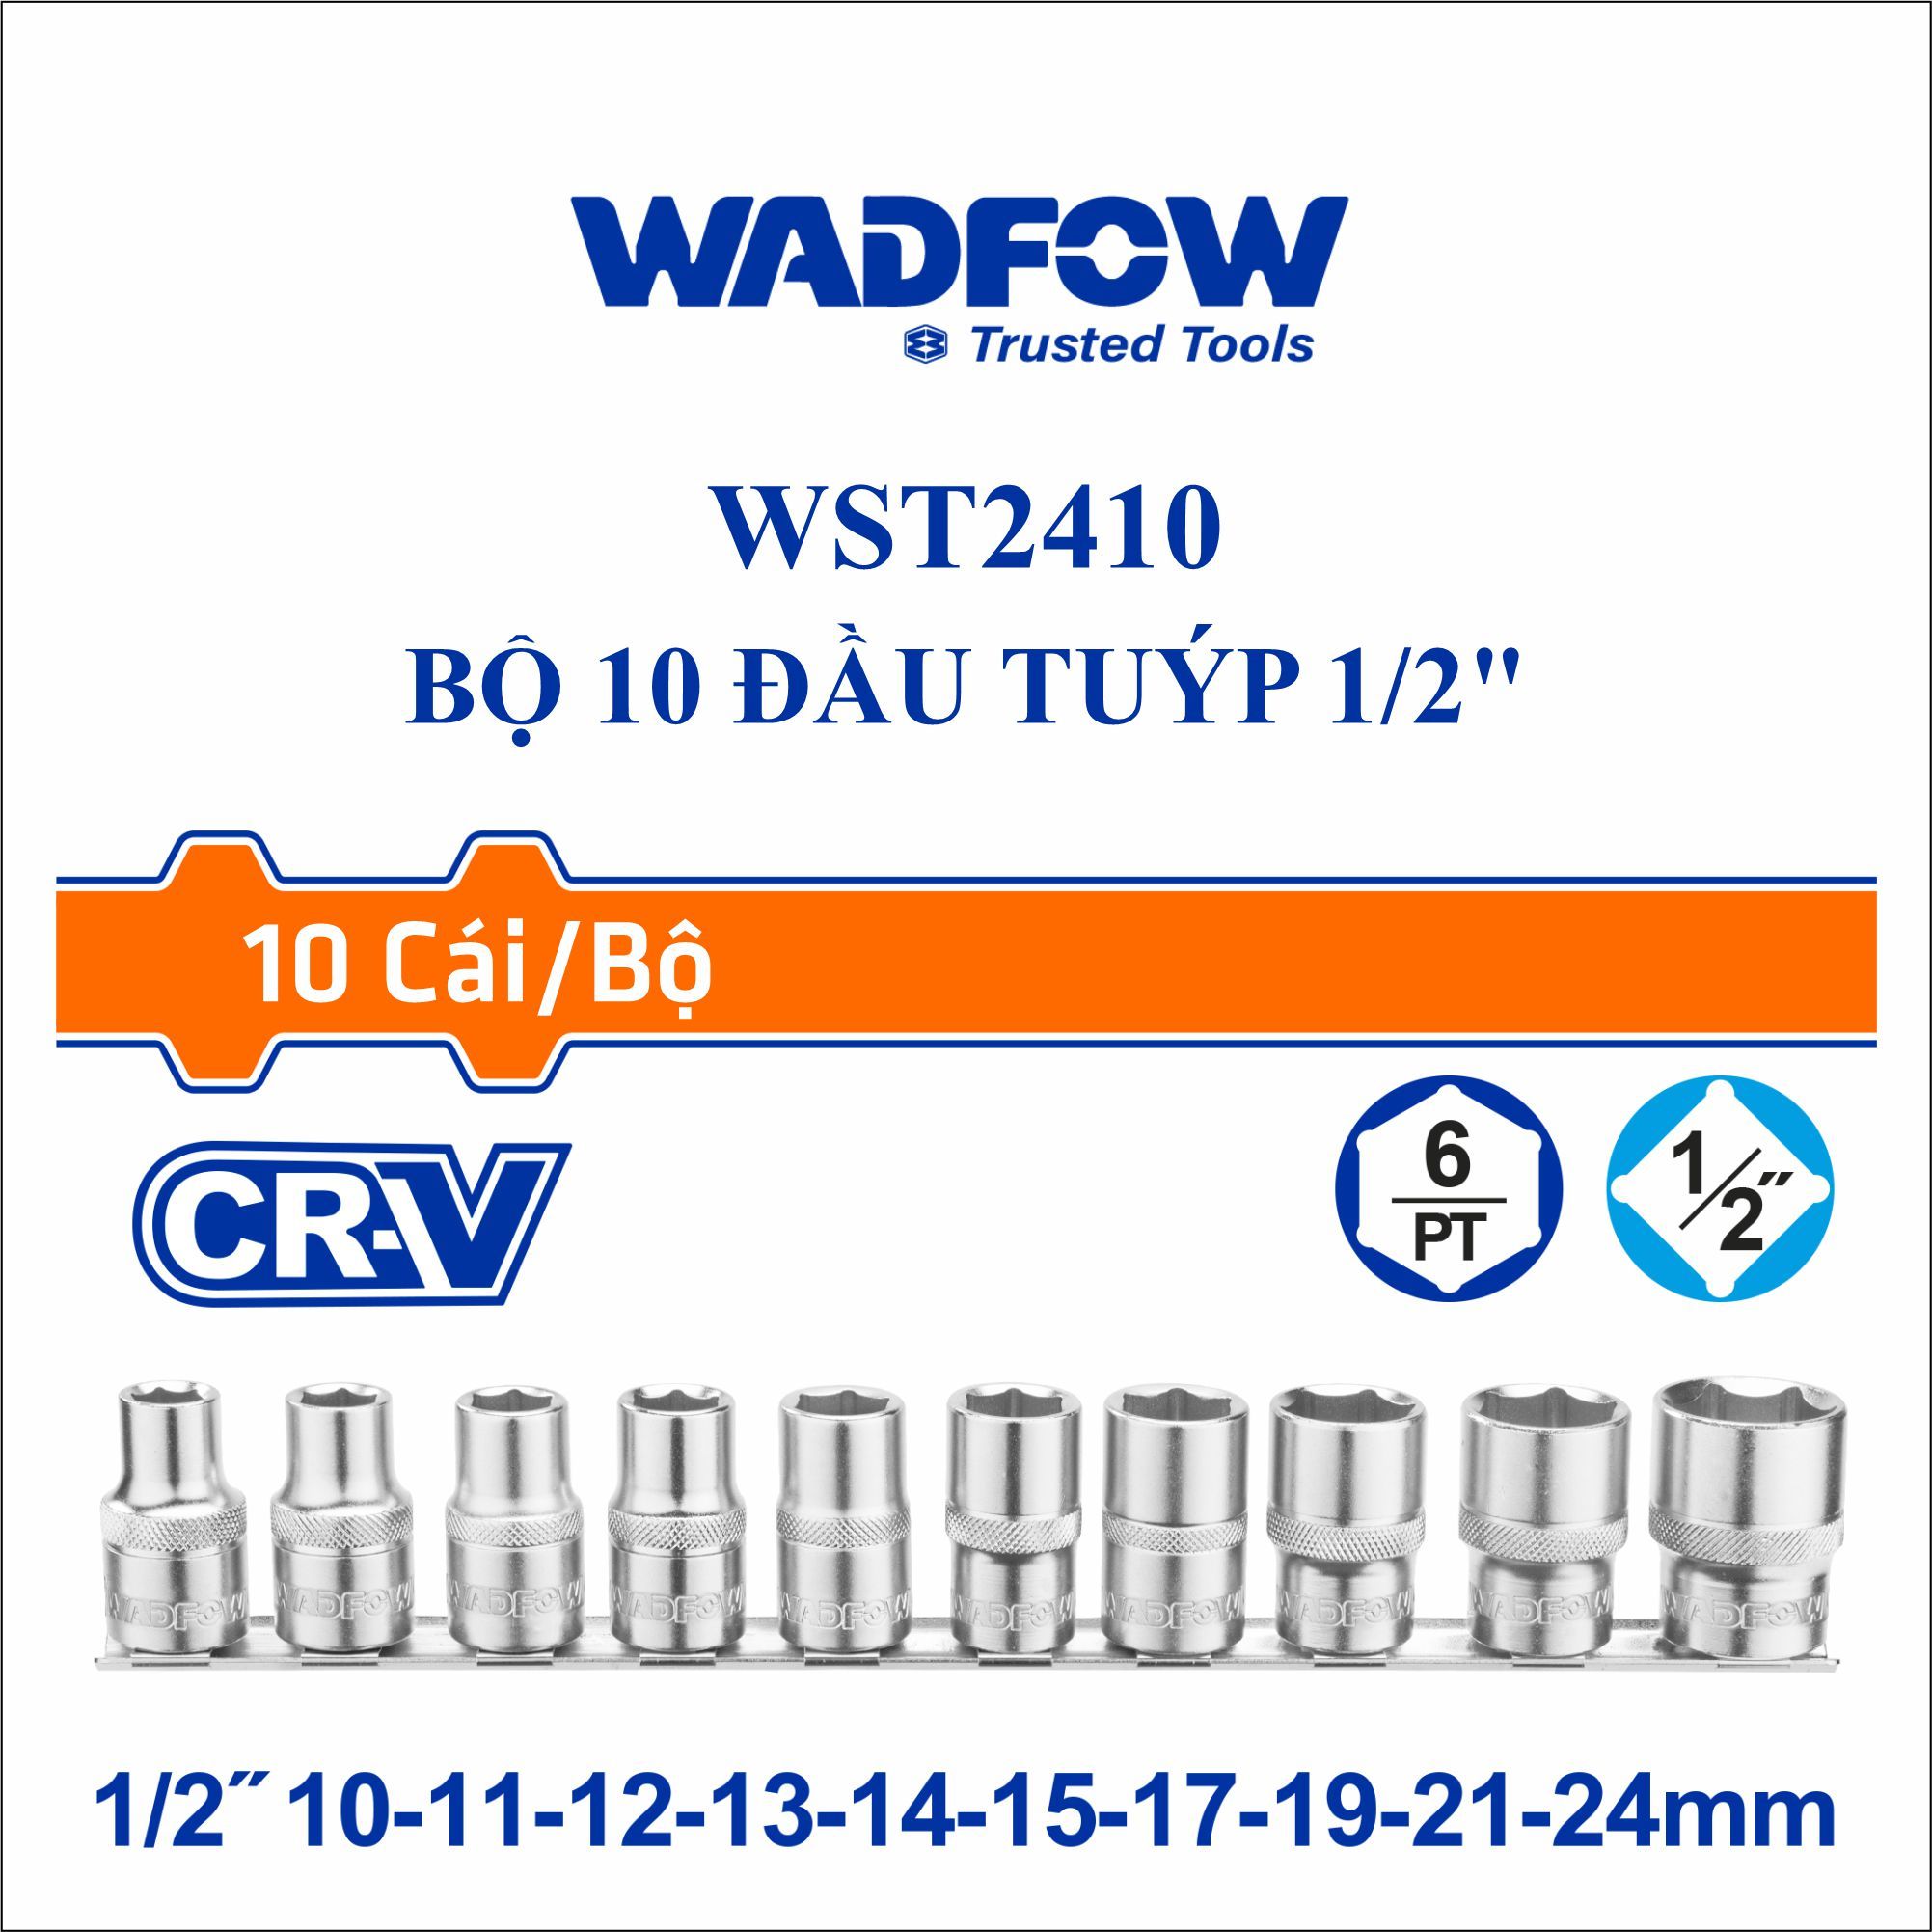  Bộ 10 đầu tuýp 1/2 Inch WADFOW WST2410 